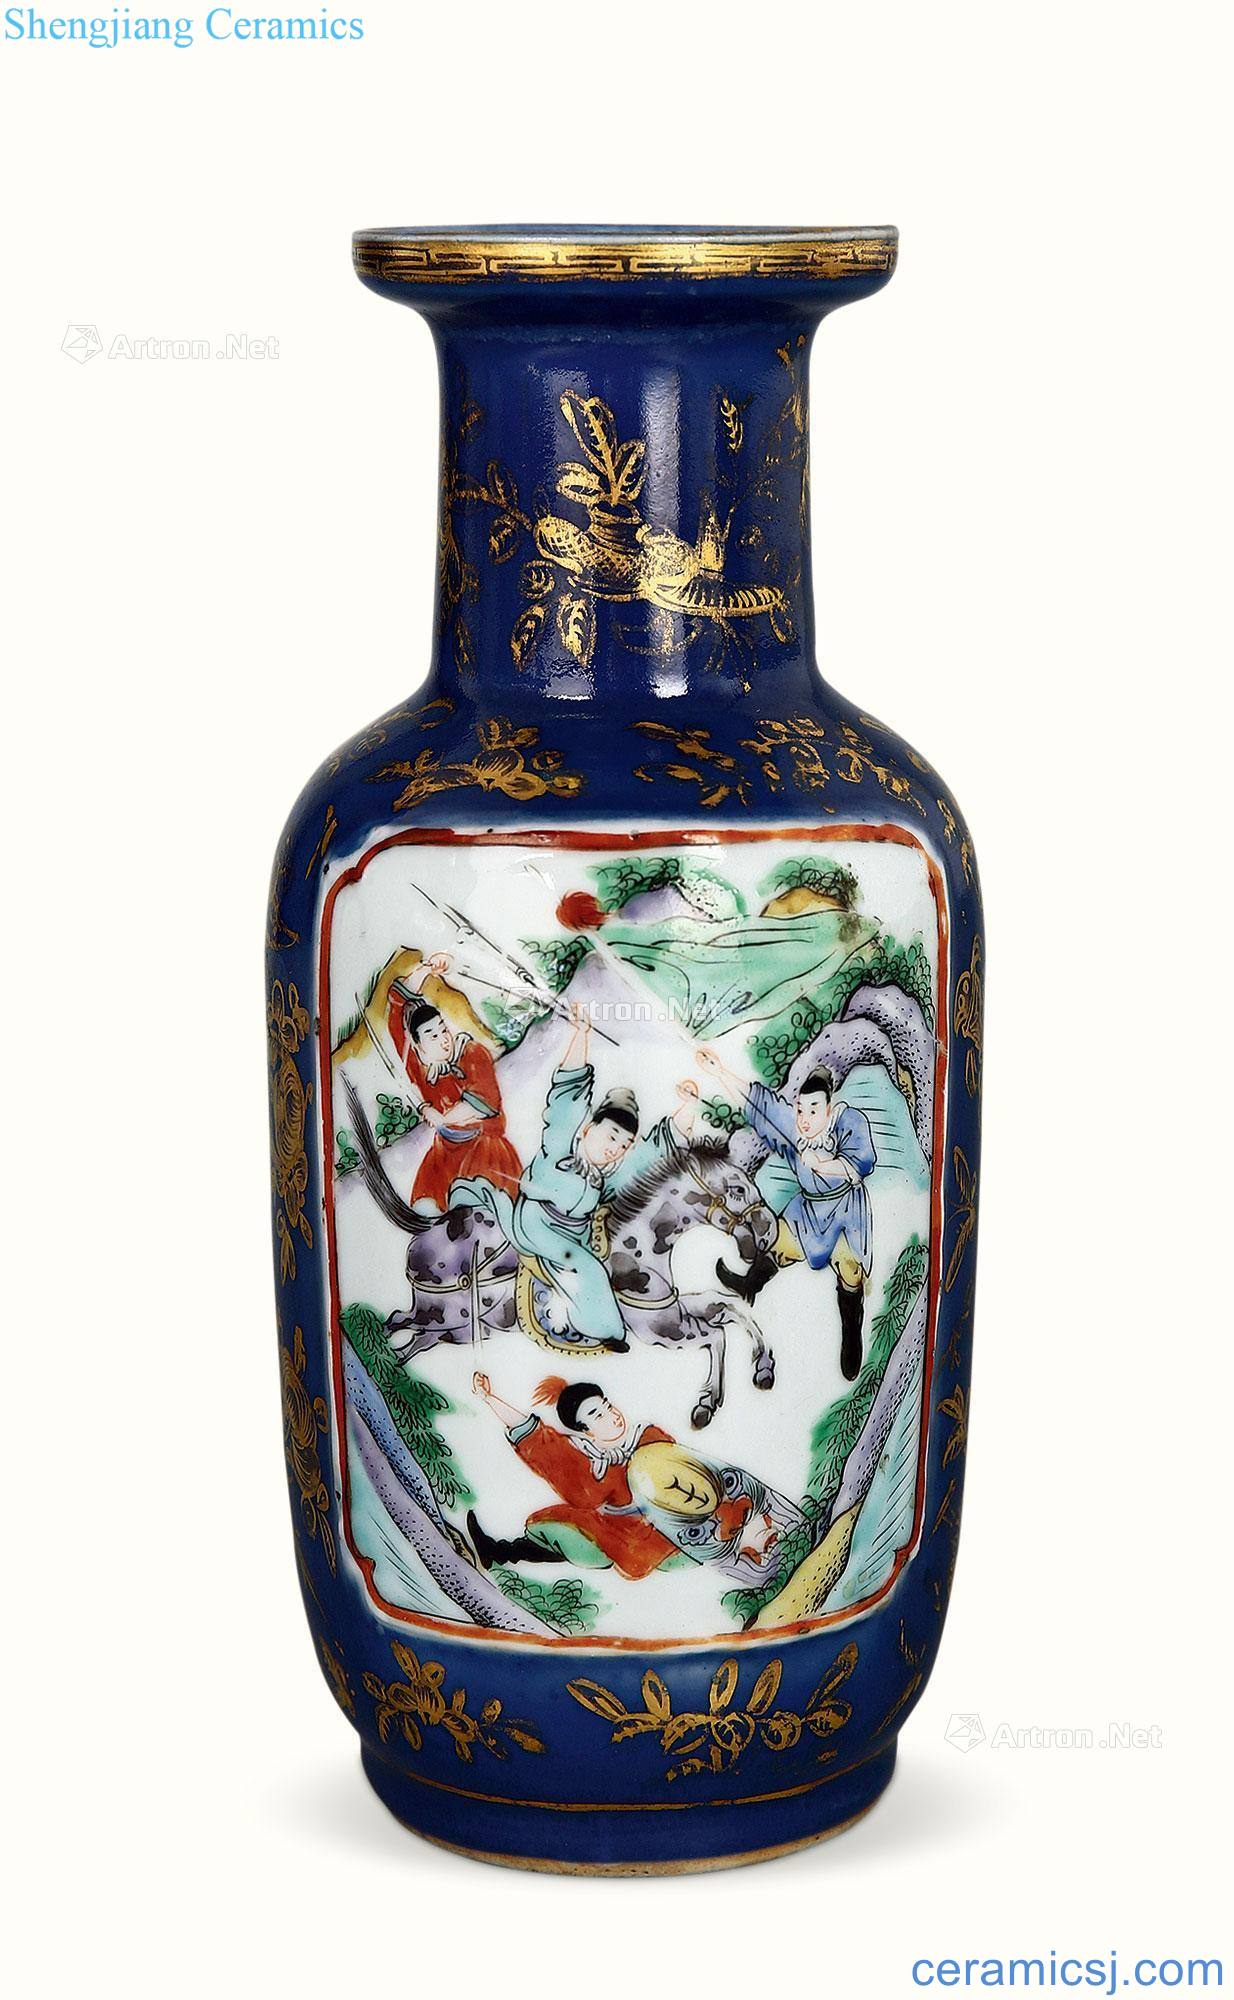 The blue paint medallion reign of qing emperor guangxu knife horse figures show a bottle